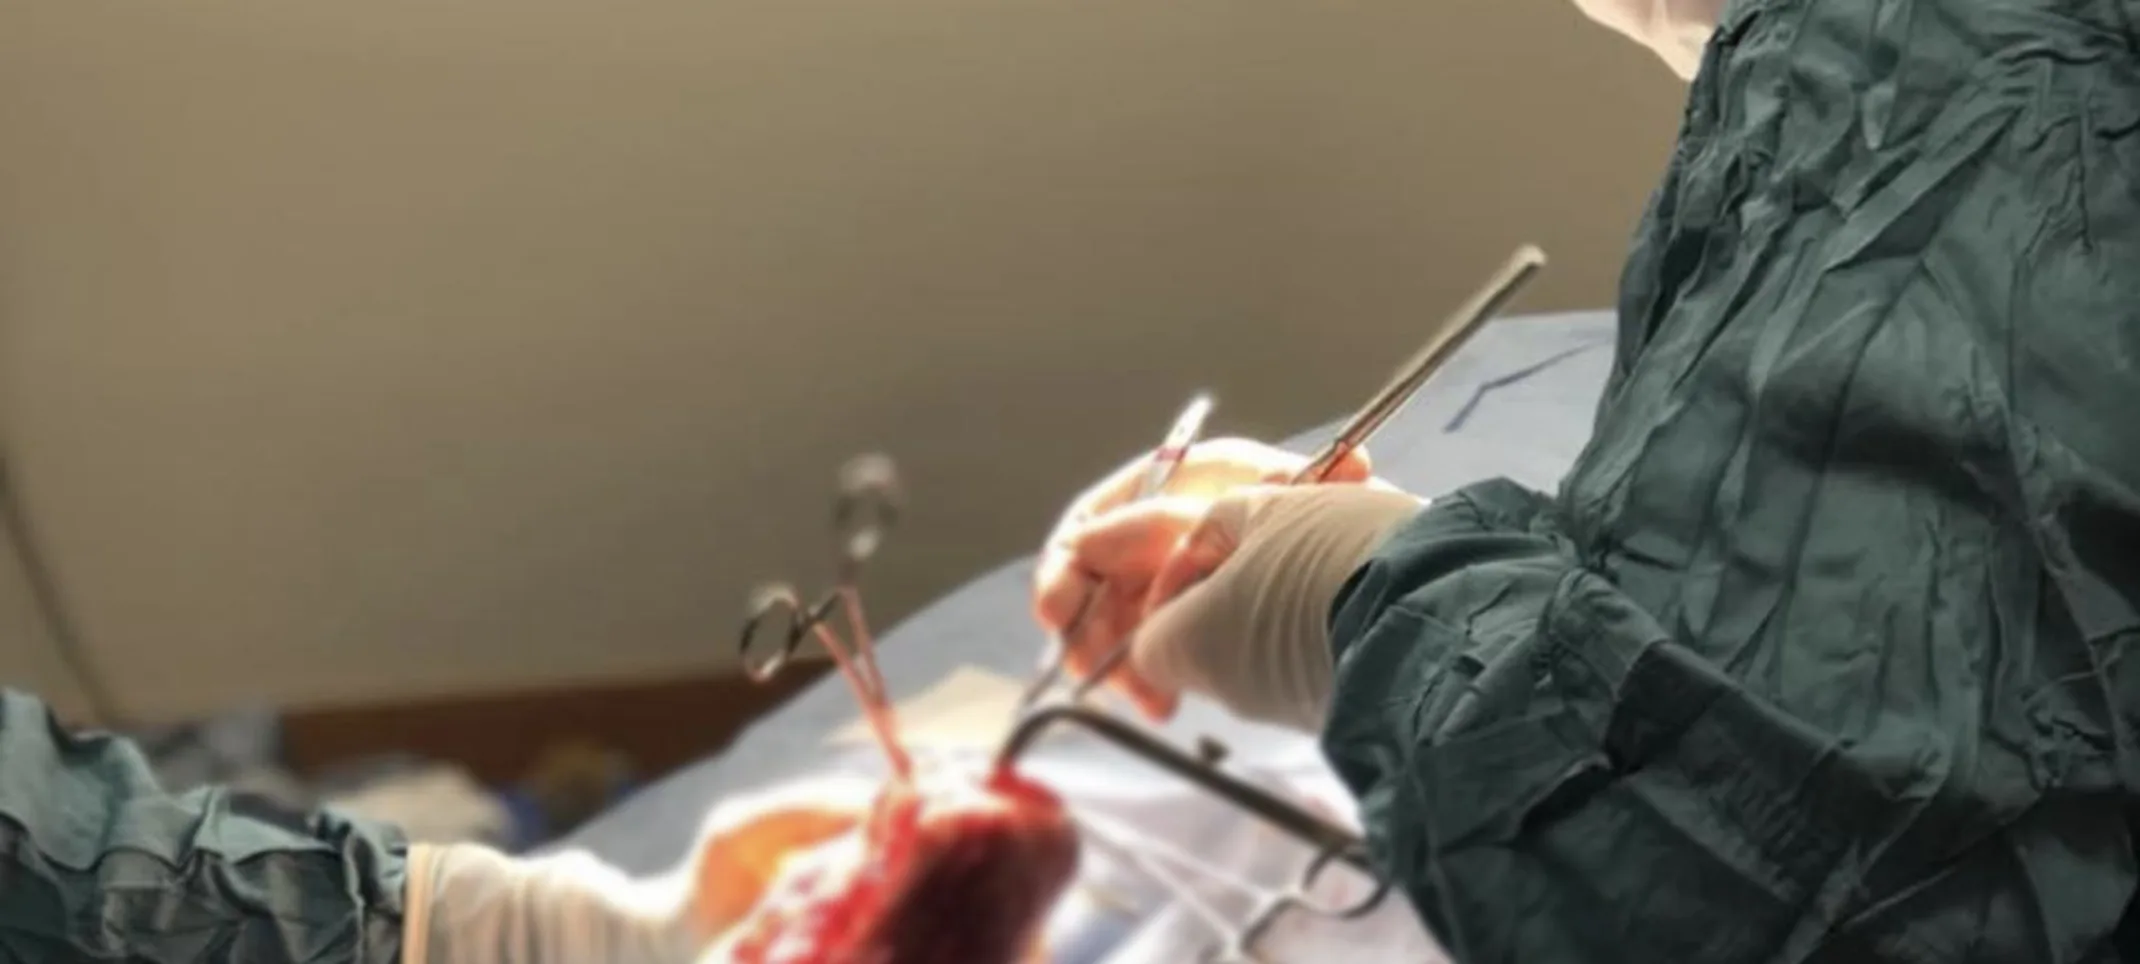 Dr. Oz conducting a surgery 